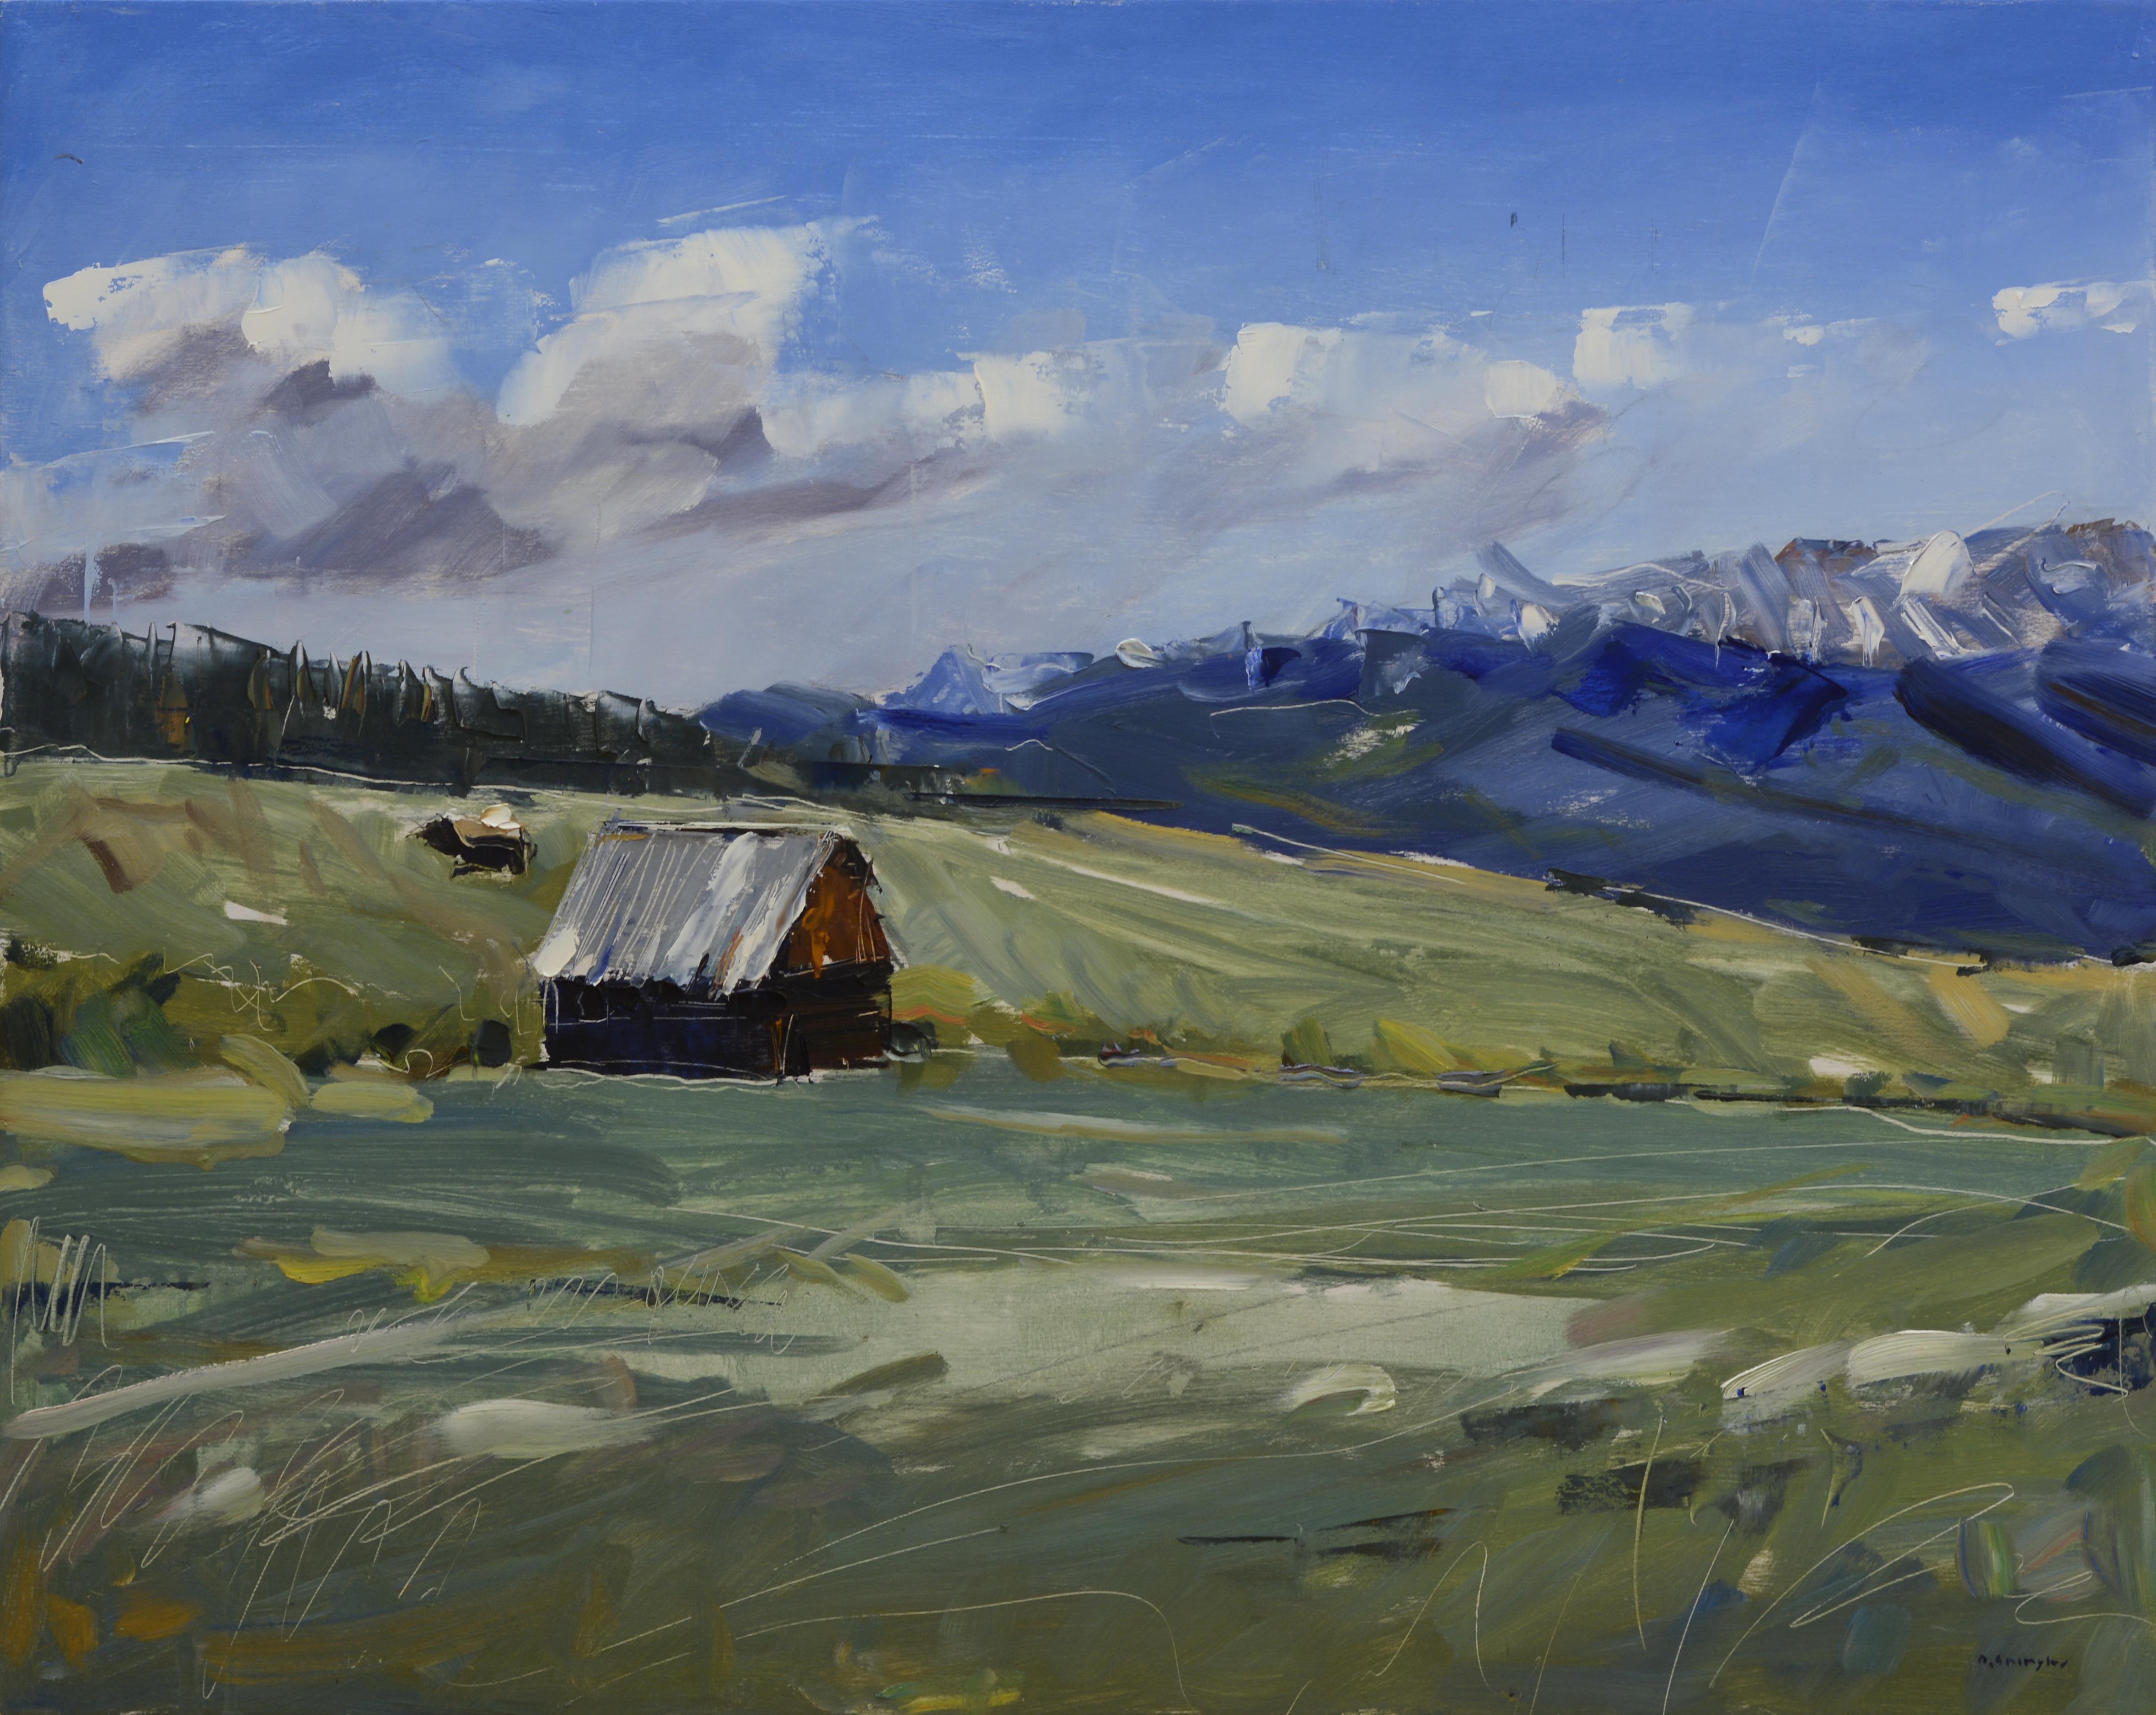 David Shingler Landscape Painting - "Mountain Cabin" Oil Painting